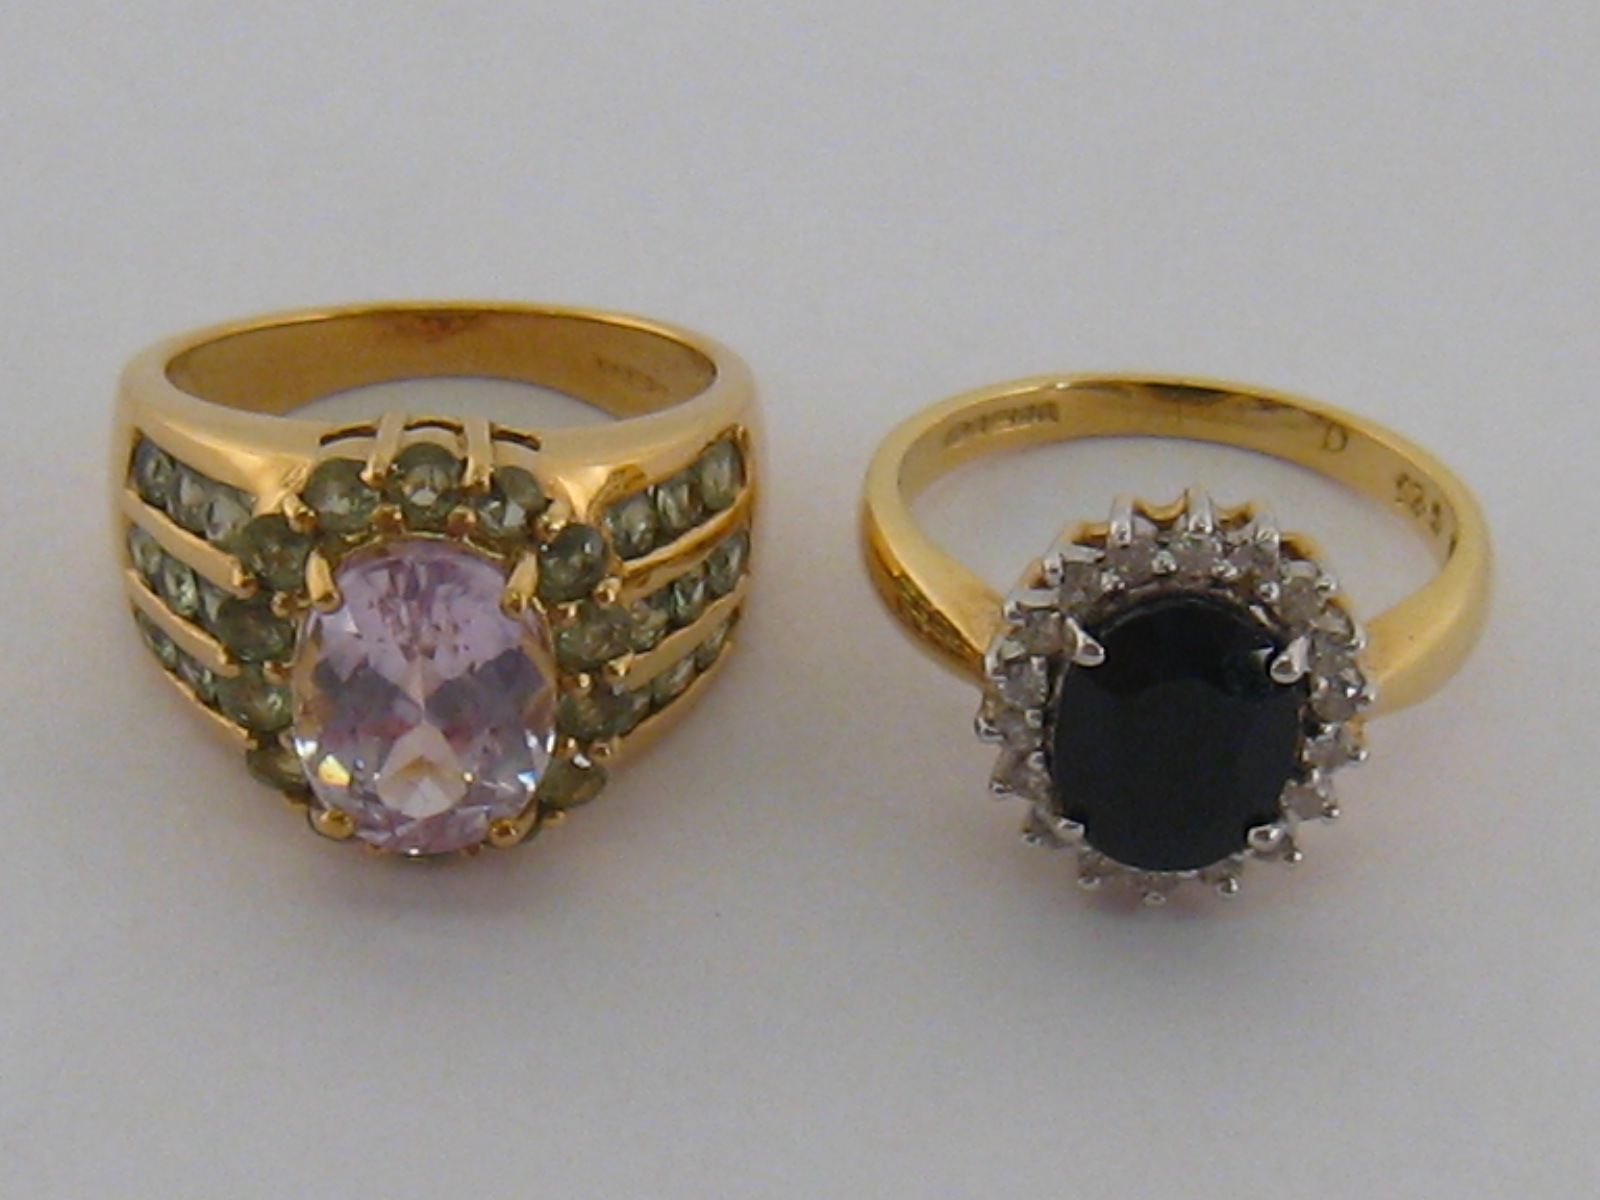 Two 18 carat gold gem set rings, both fully hallmarked, finger size M/N, 13.